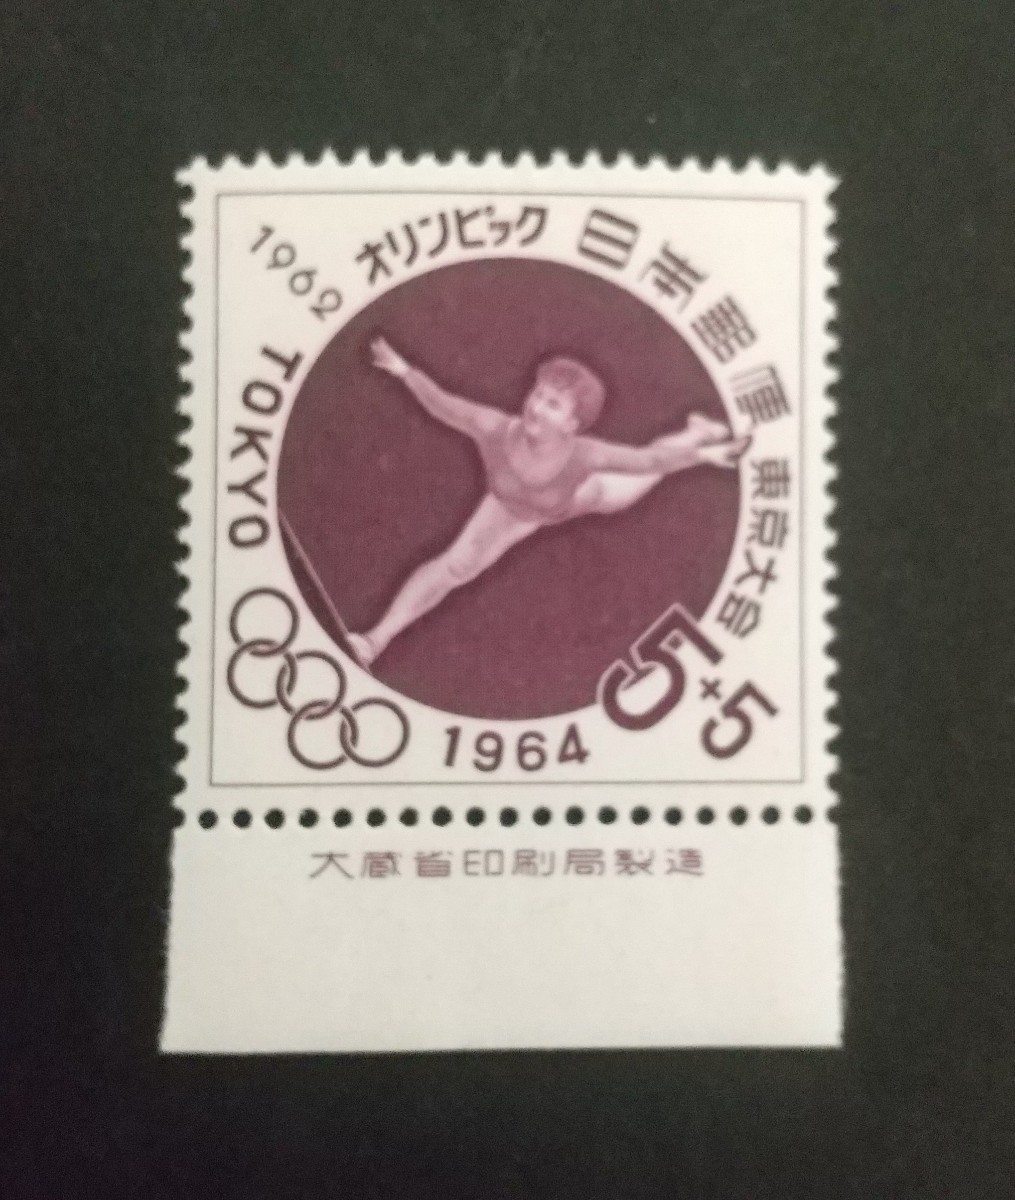 記念切手 東京オリンピック 寄附金付平均台 1962 大蔵省銘板付き 未使用品 (ST-10)_画像1